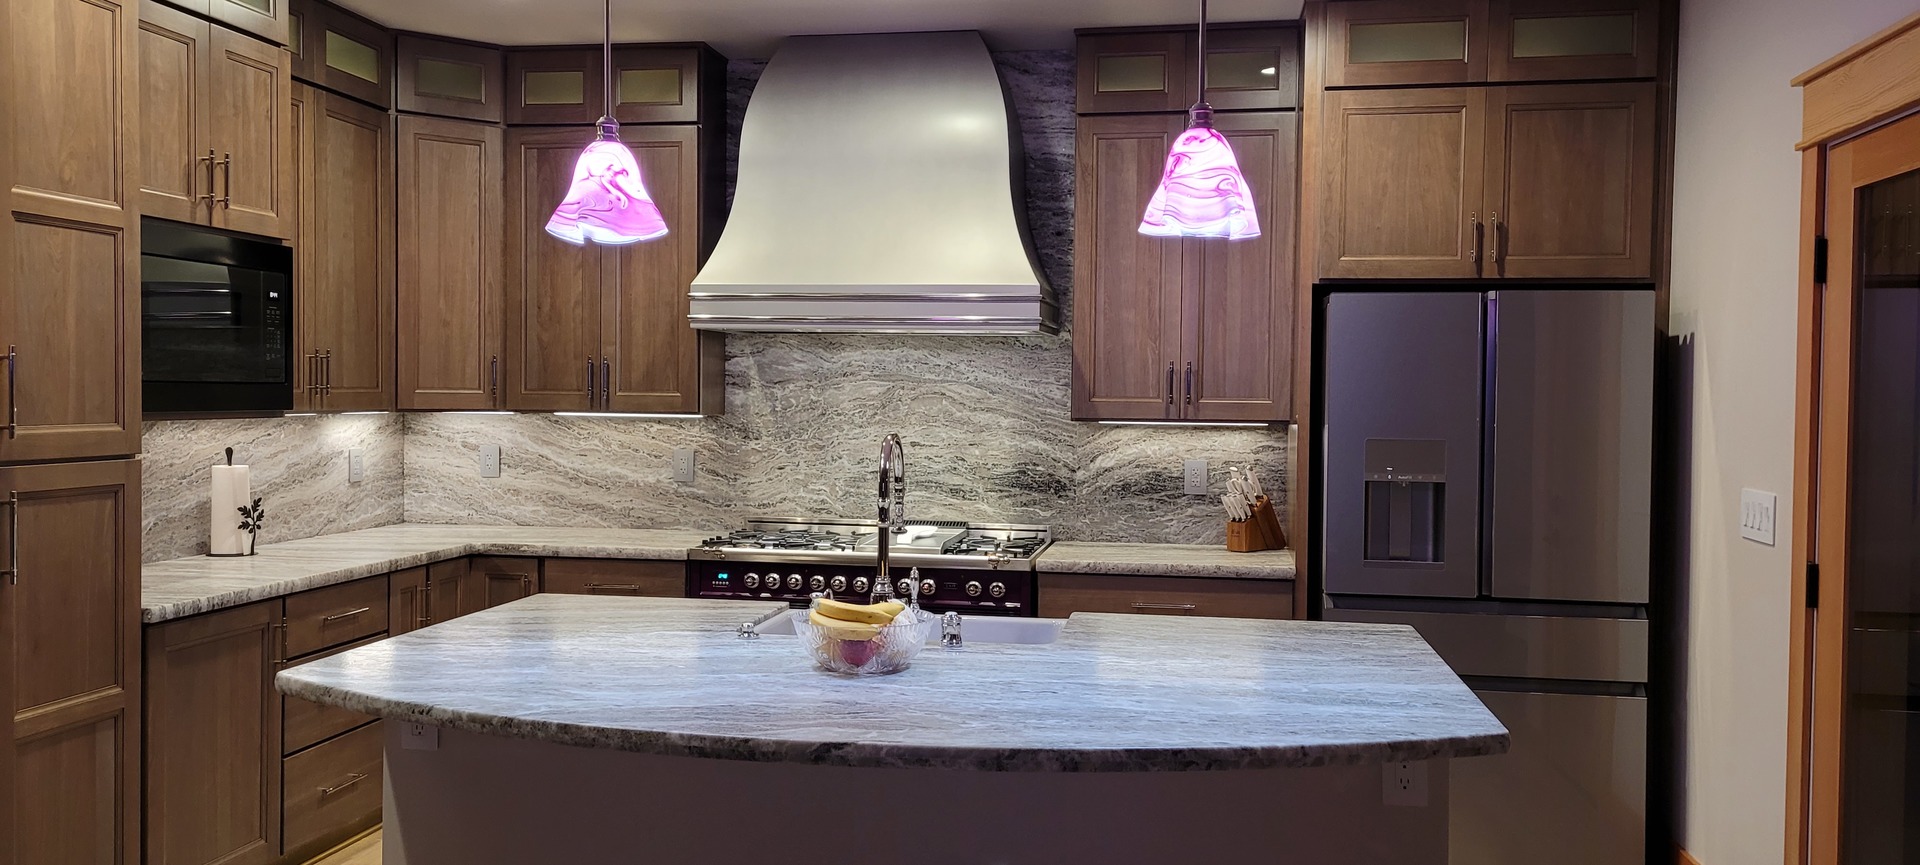 Charming kitchen design idea with kitchen sink, country kitchen designs, brown kitchen cabinets, marble kitchen countertops, and marble backsplash